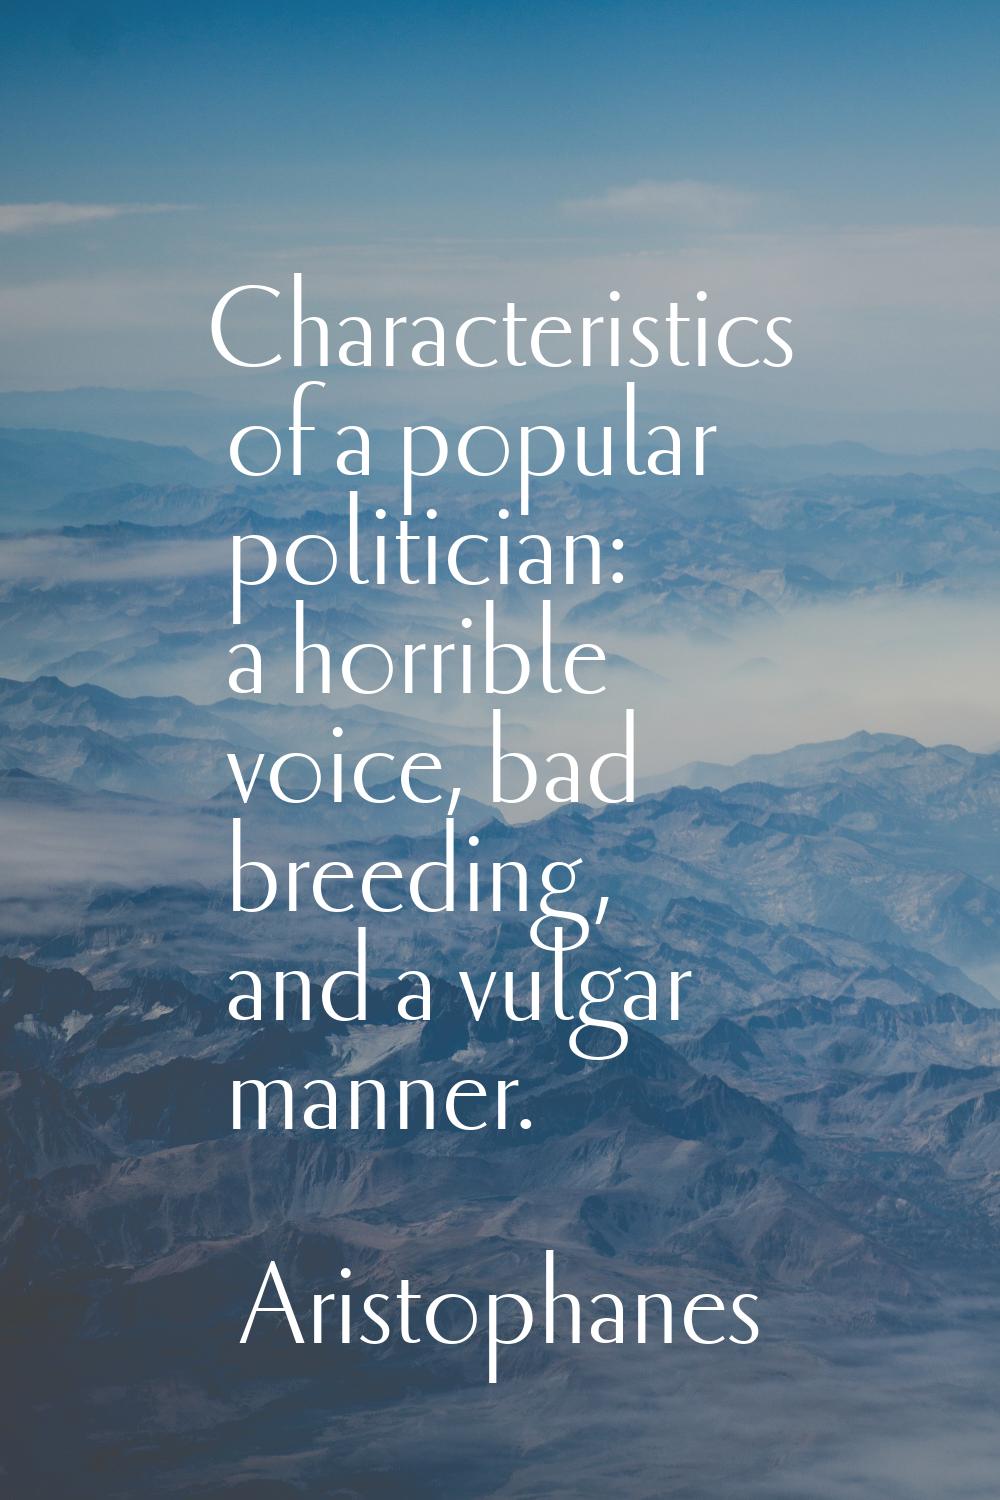 Characteristics of a popular politician: a horrible voice, bad breeding, and a vulgar manner.